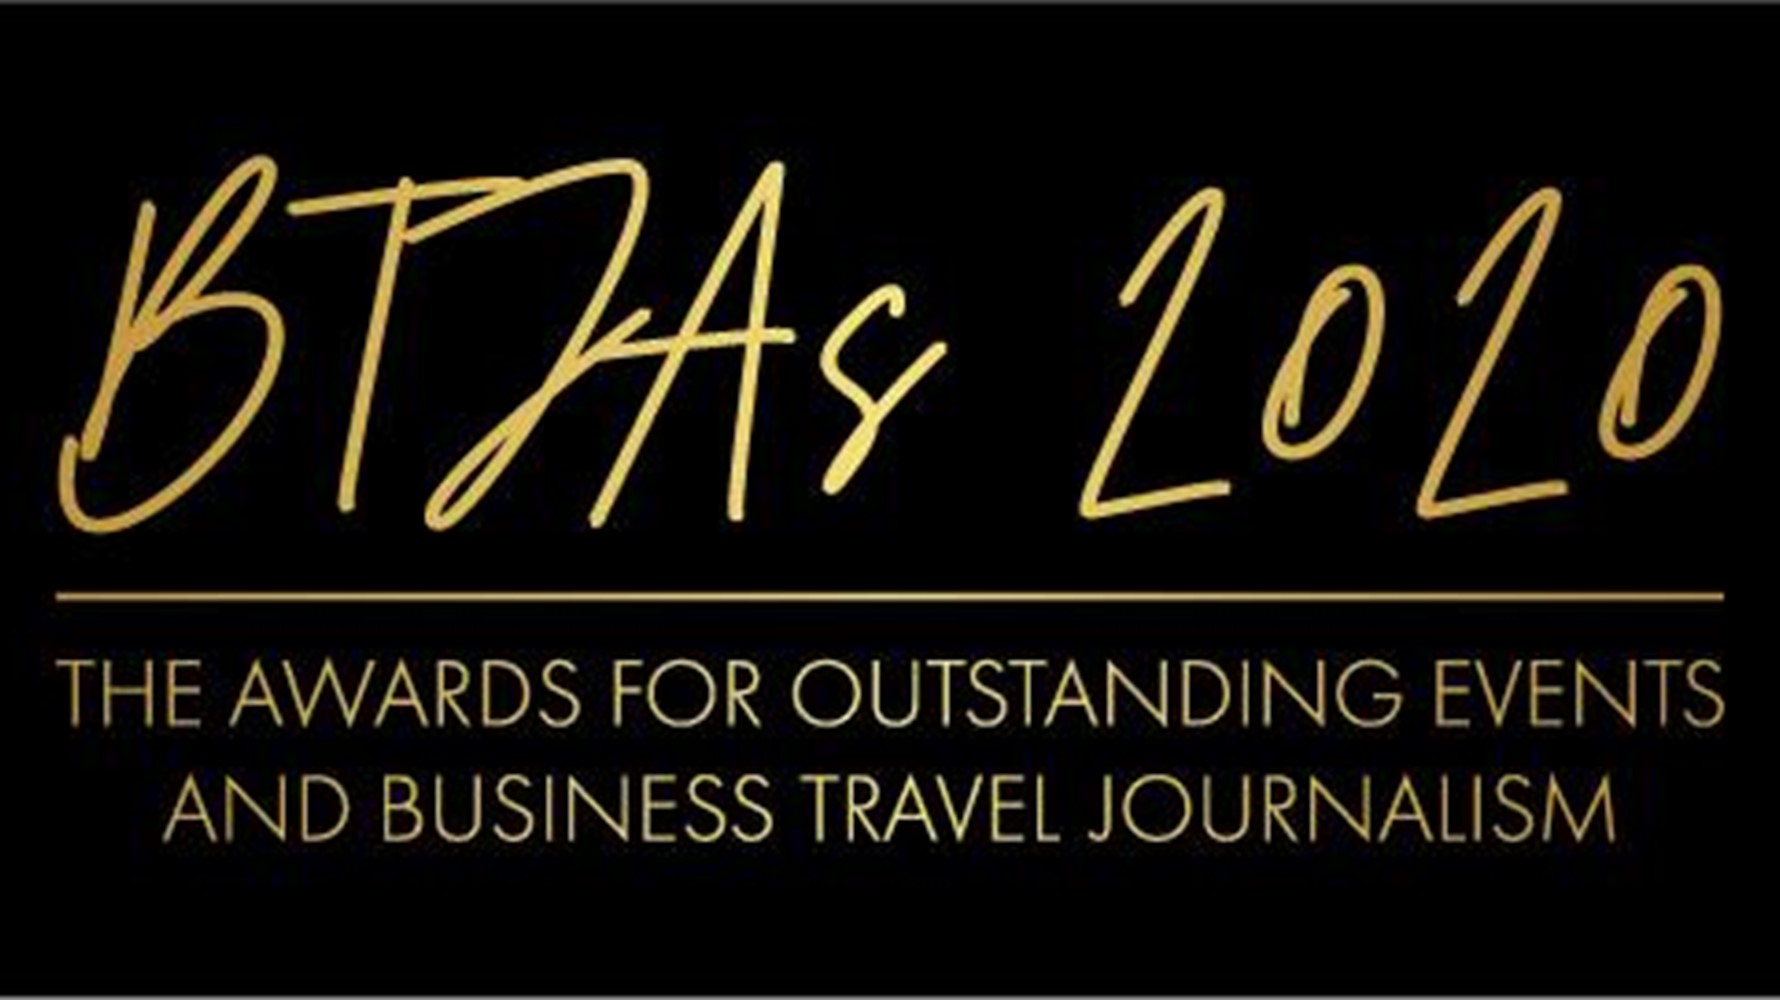 business travel journalism awards